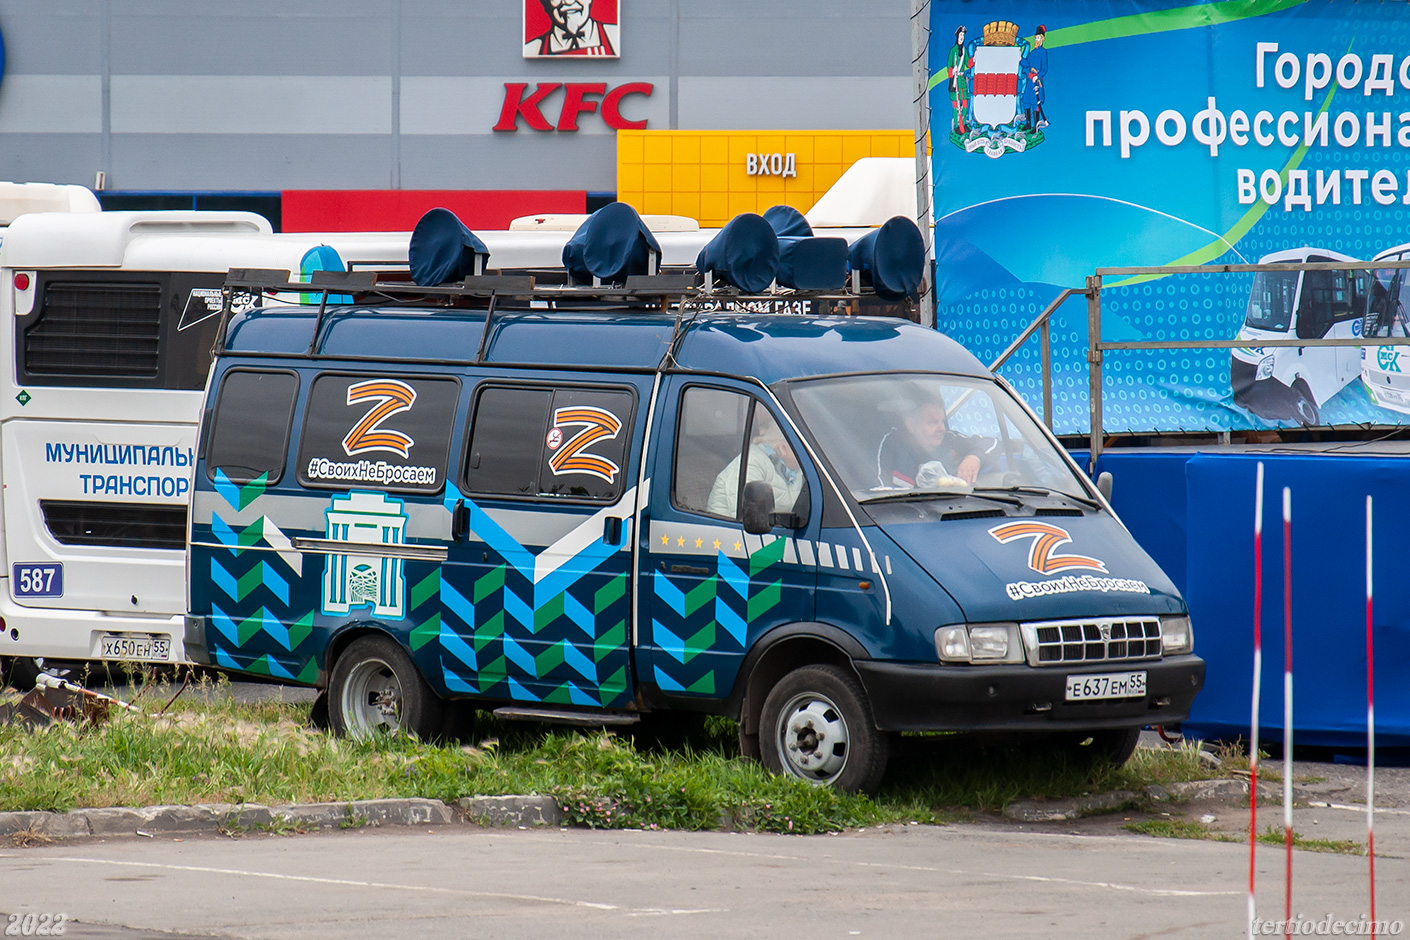 Omsk region, GAZ-322132 (XTH, X96) Nr. Е 637 ЕМ 55; Omsk region — 19.08.2022 — XXIII City competition of professional skills of bus drivers